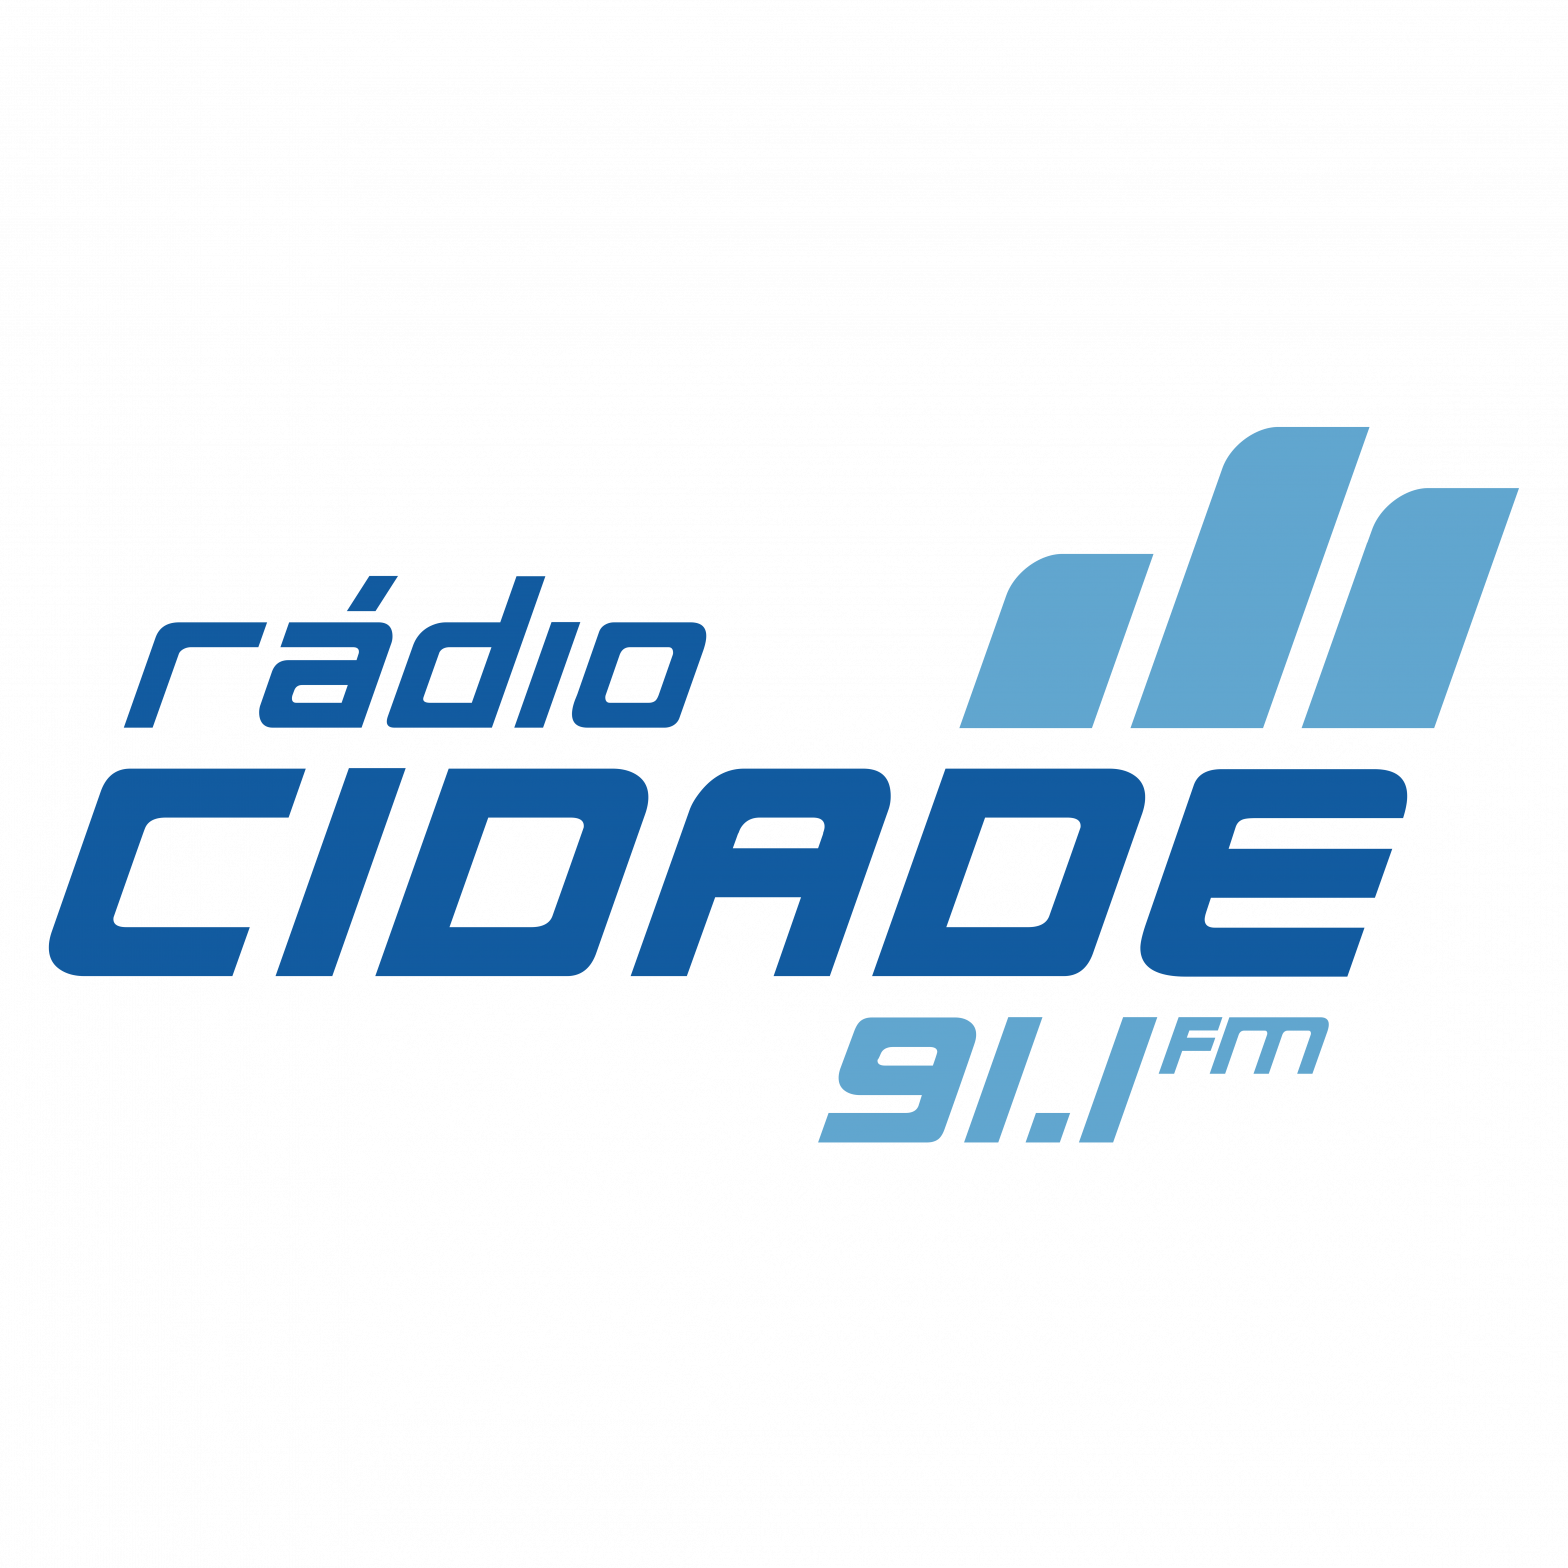 RADIO CIDADE 91.1 FM